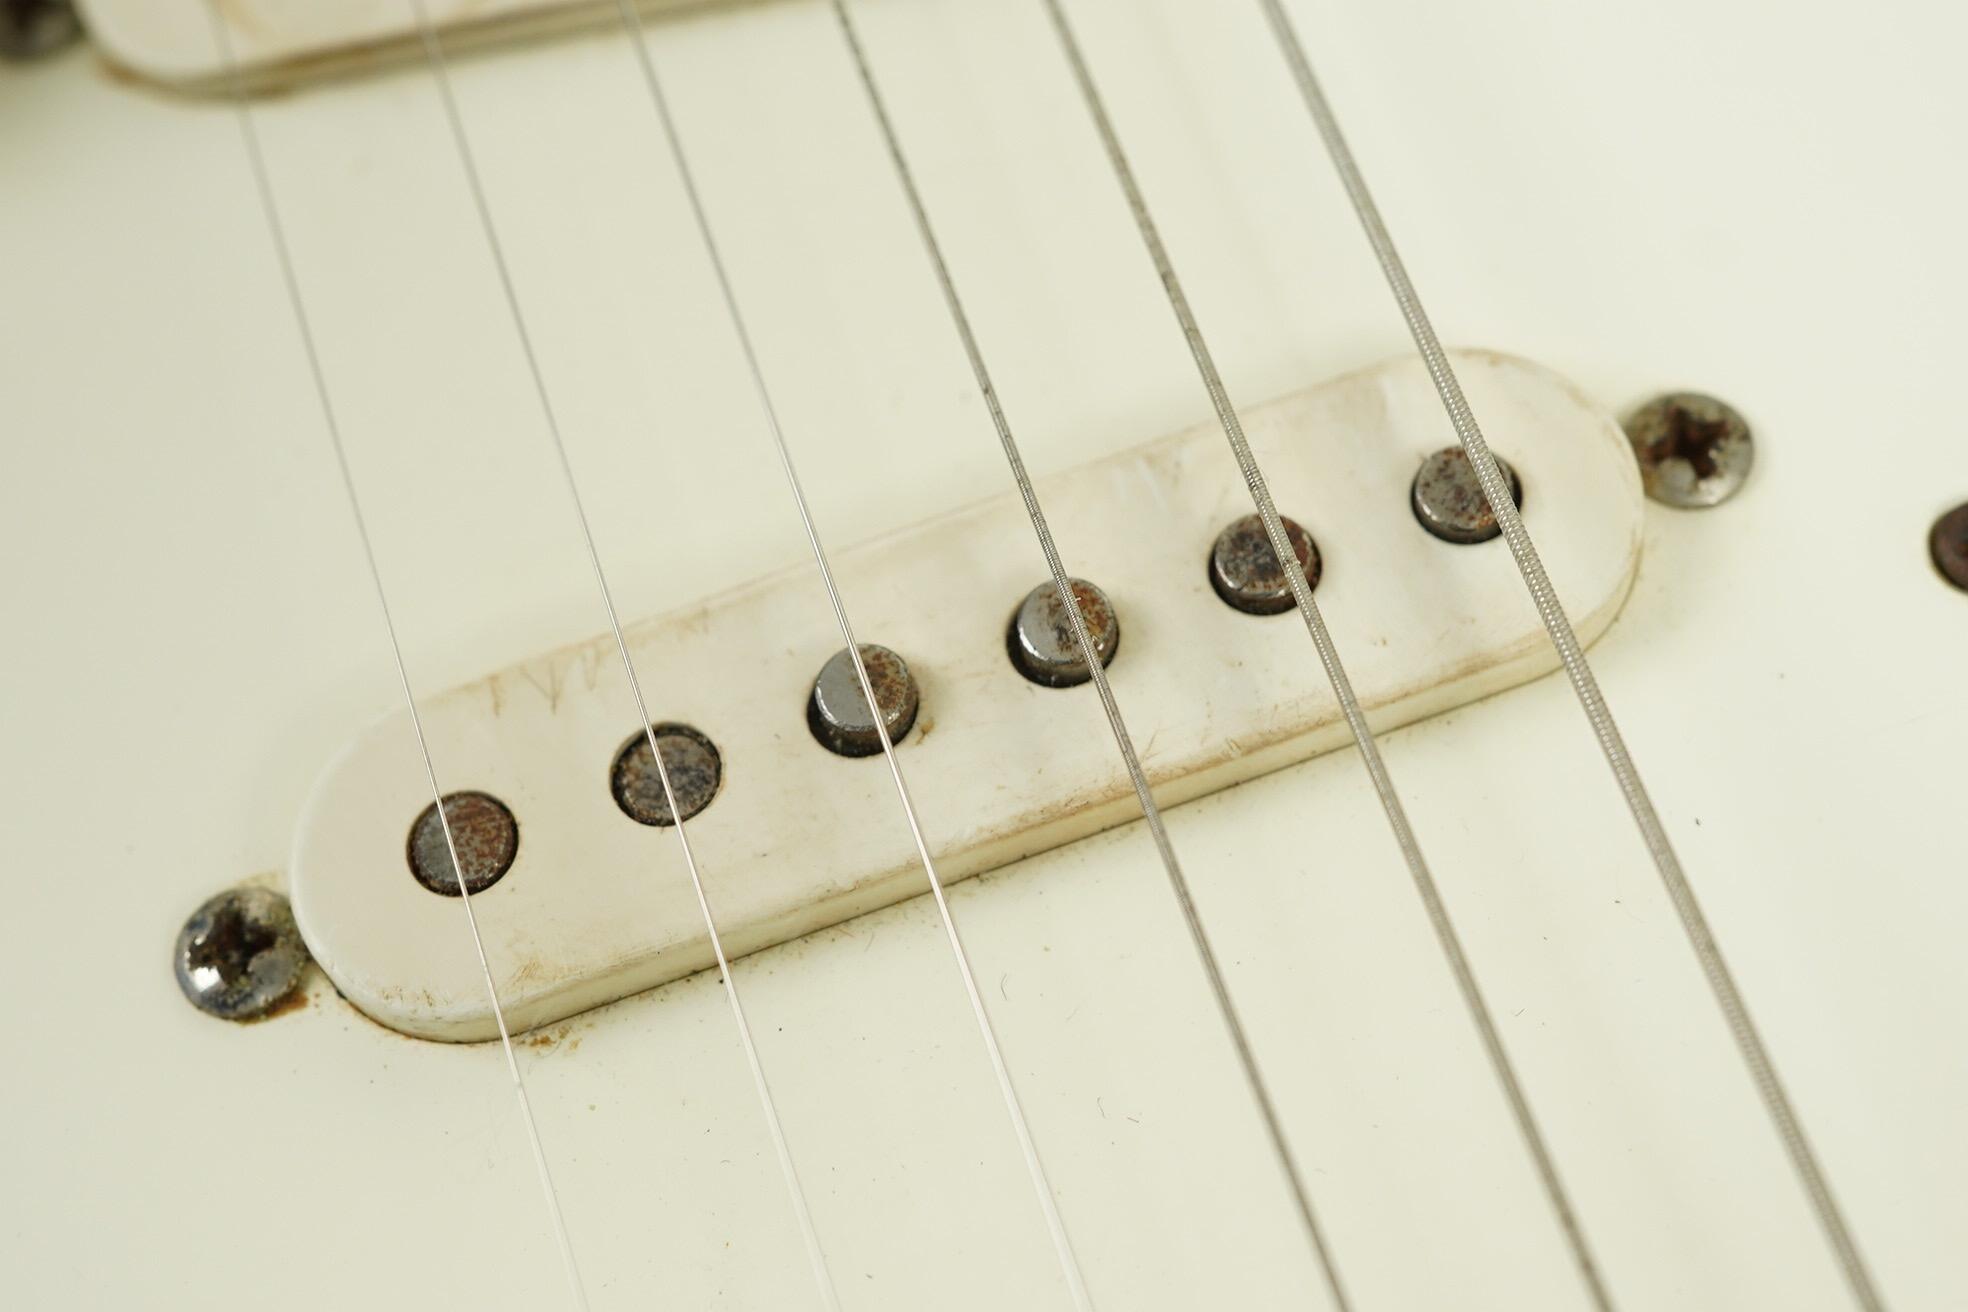 2012 Fender Custom Shop '56 Strat